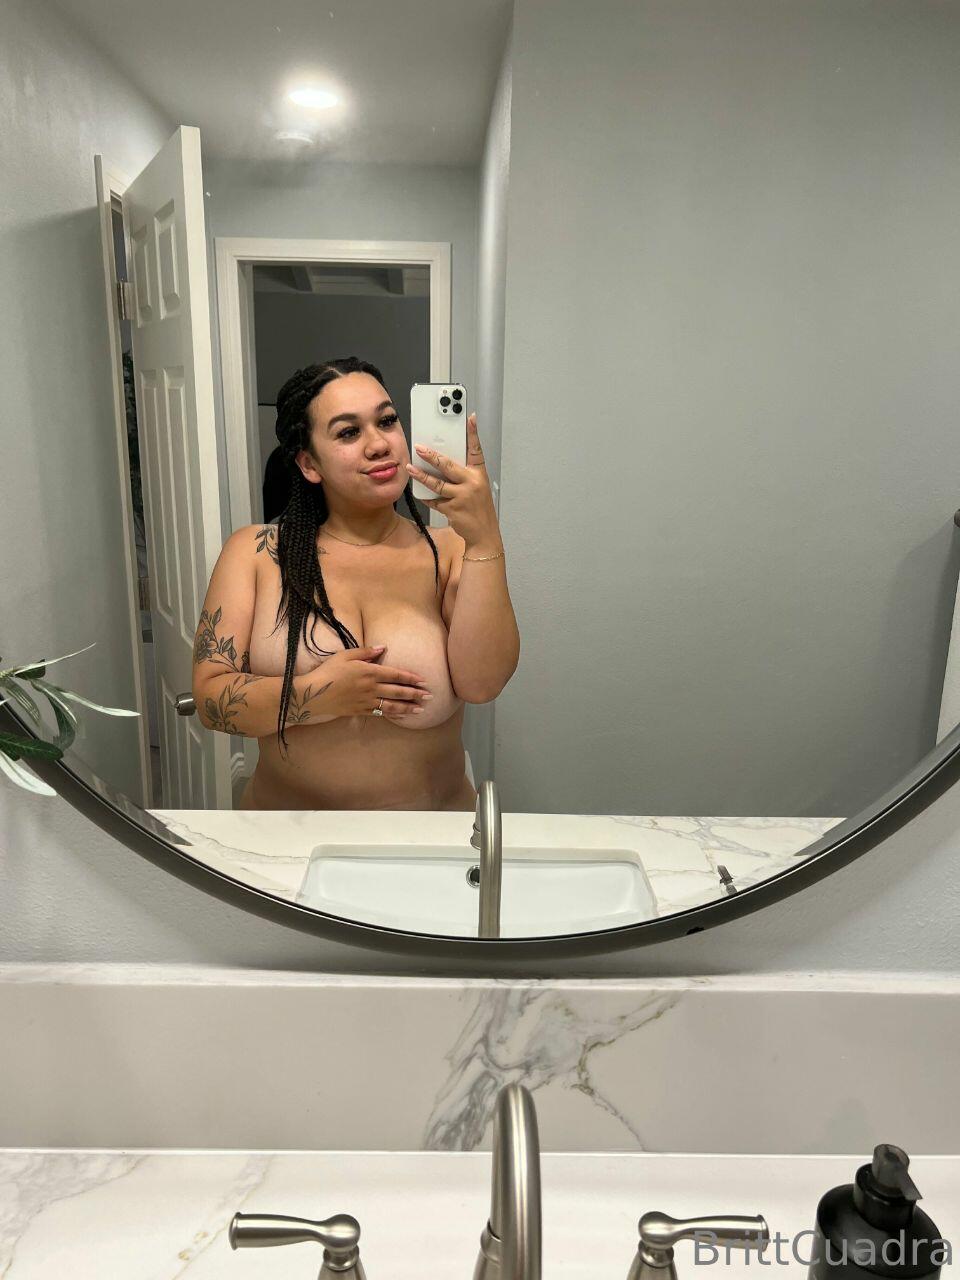 Britt Cuadra Brittcuadra Nude Onlyfans Leaks 9 Photos Thefappening